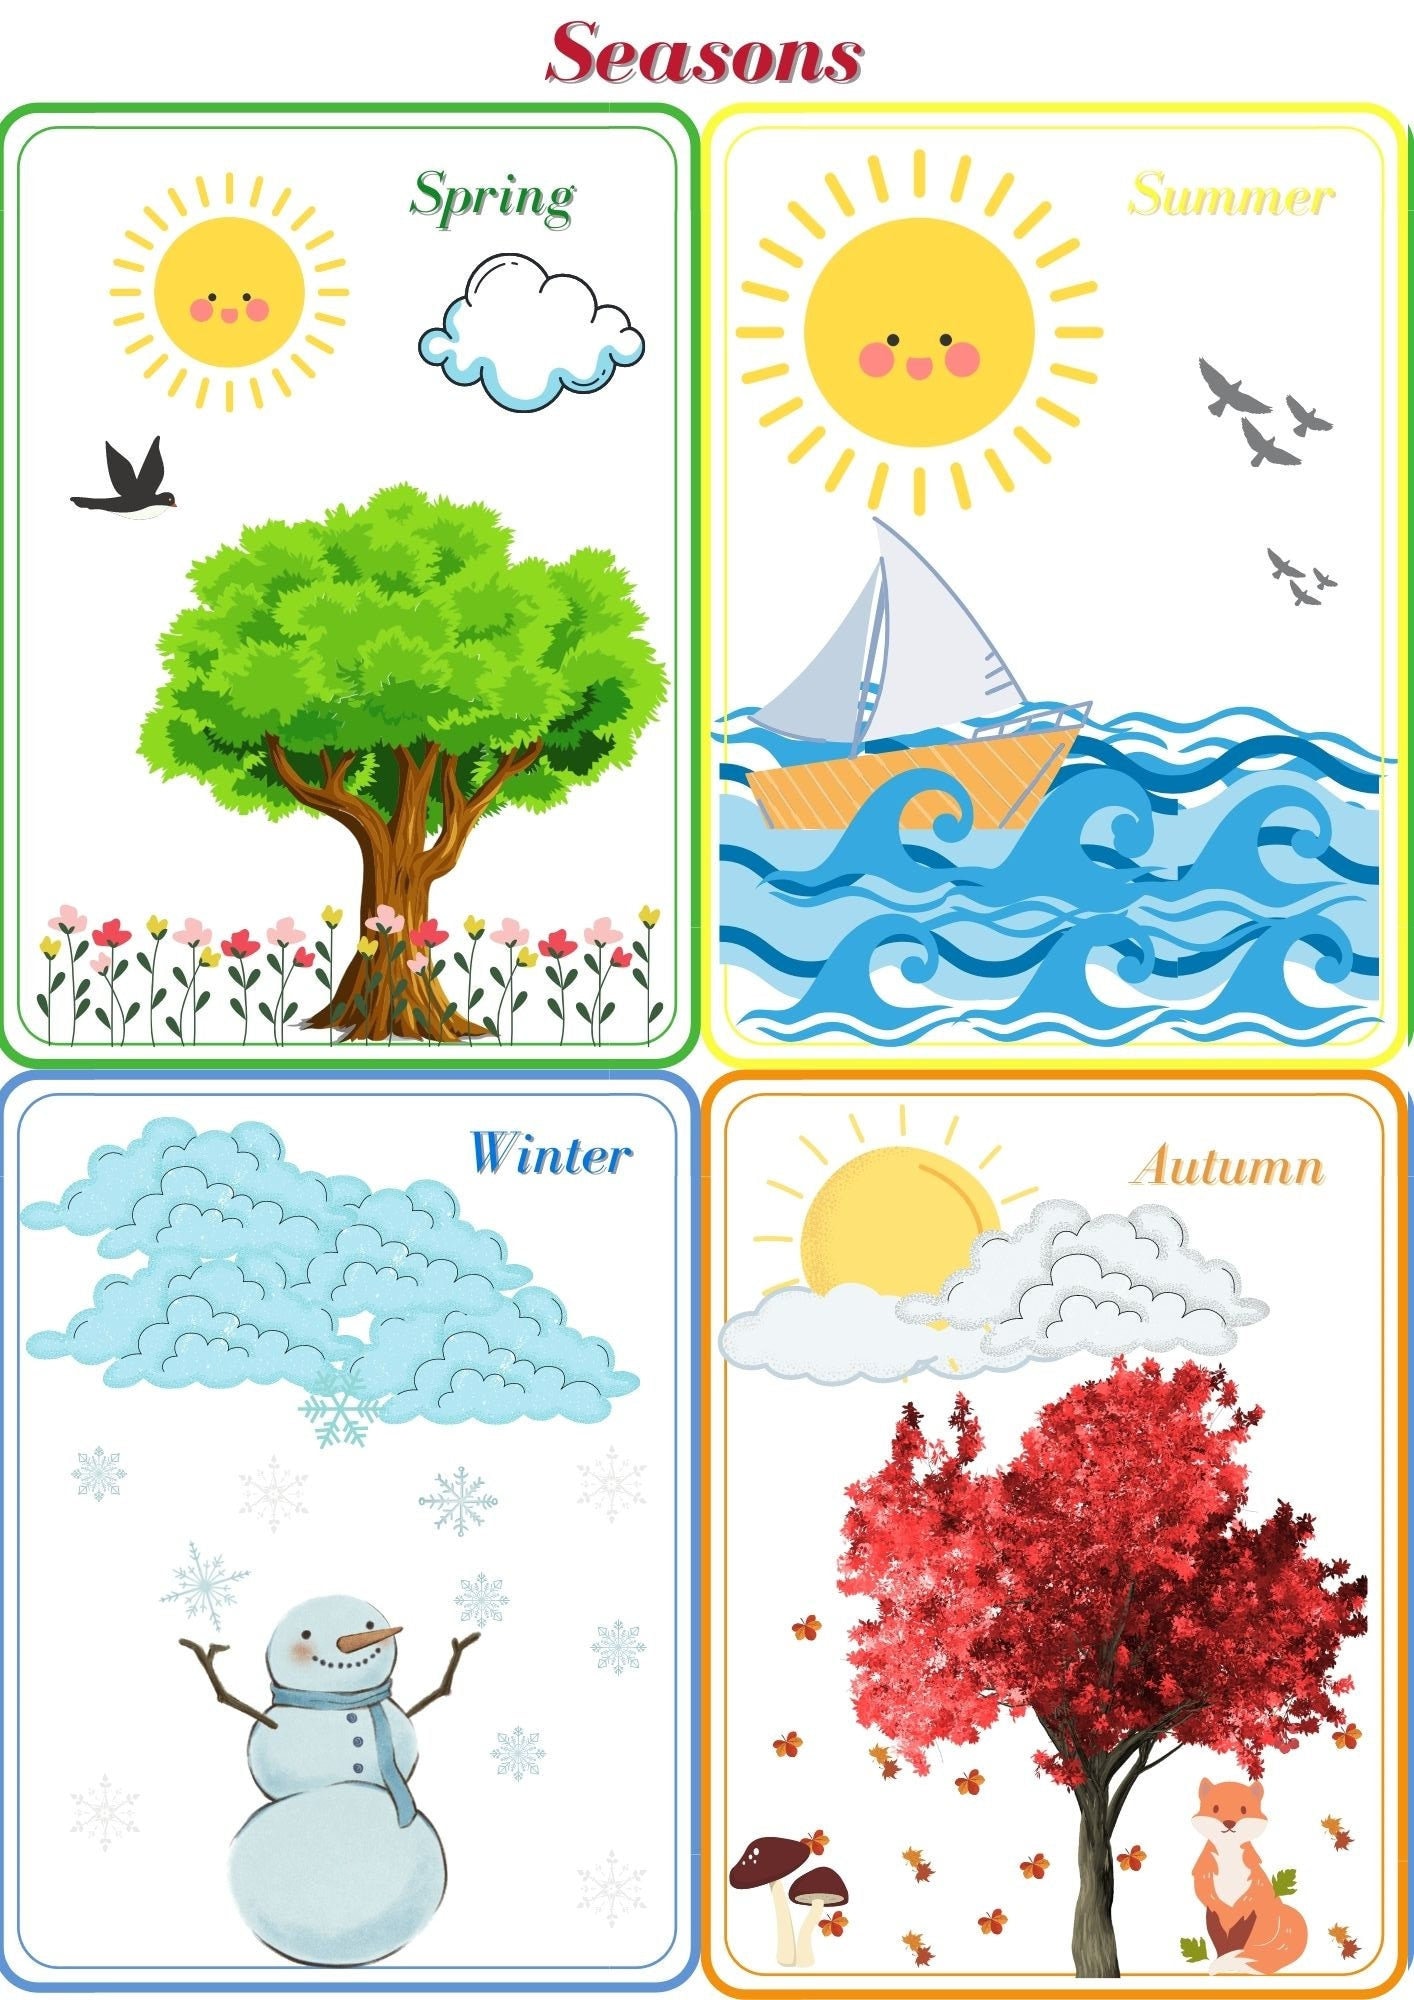 Seasons activities. Seasons Flashcards for Kids.